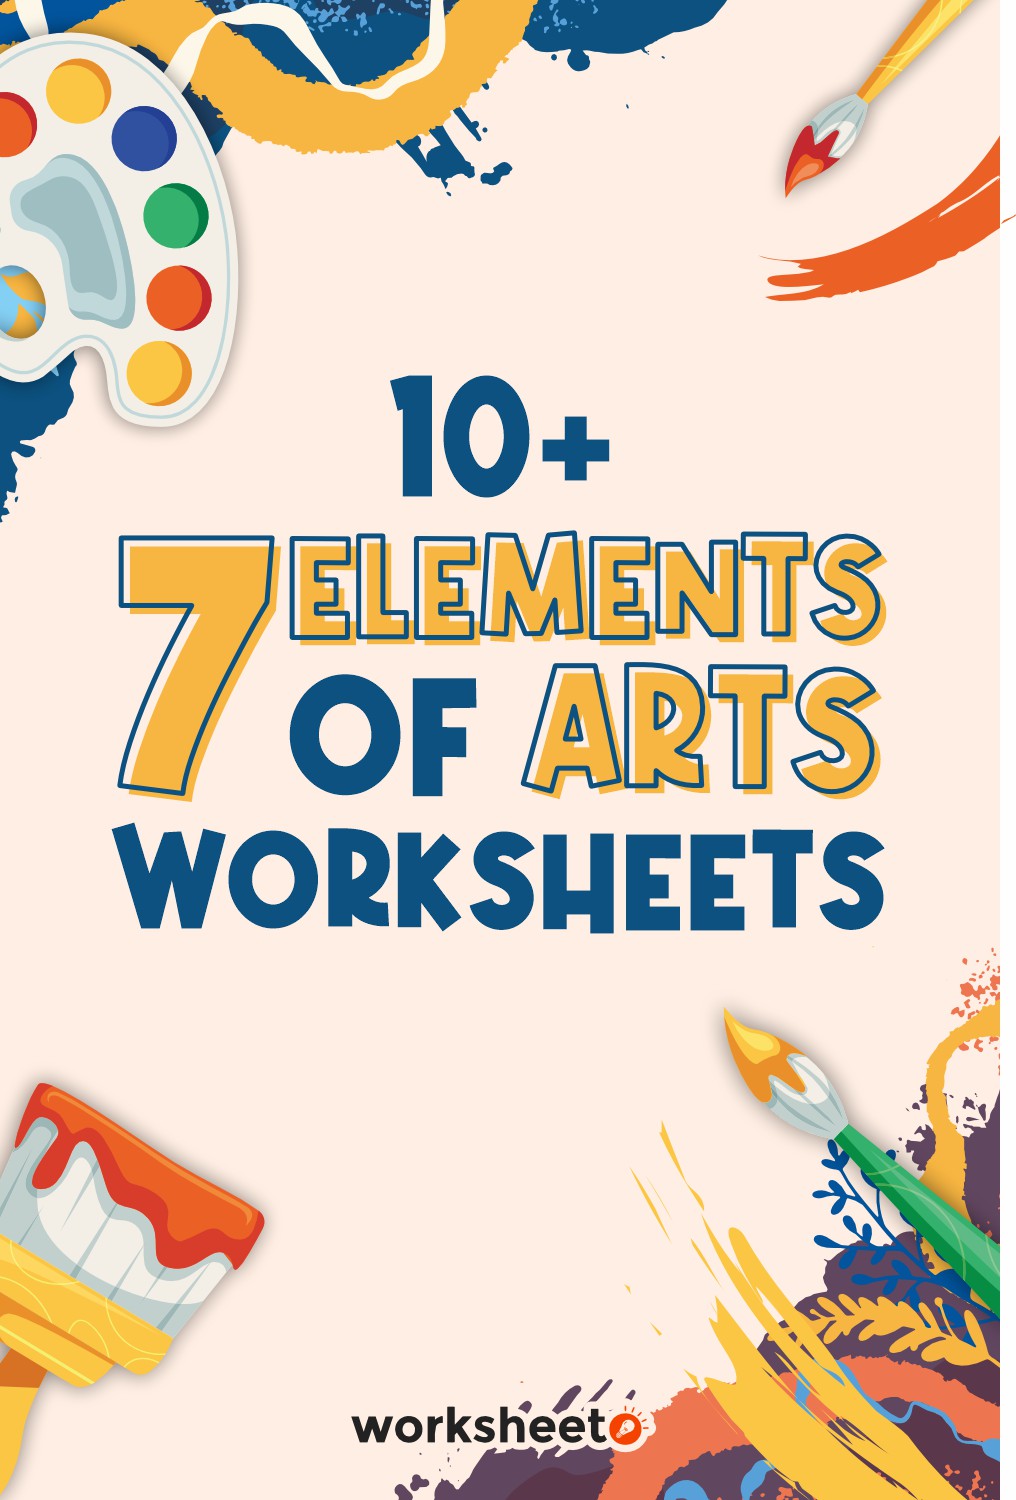 7 Elements of Art Worksheets